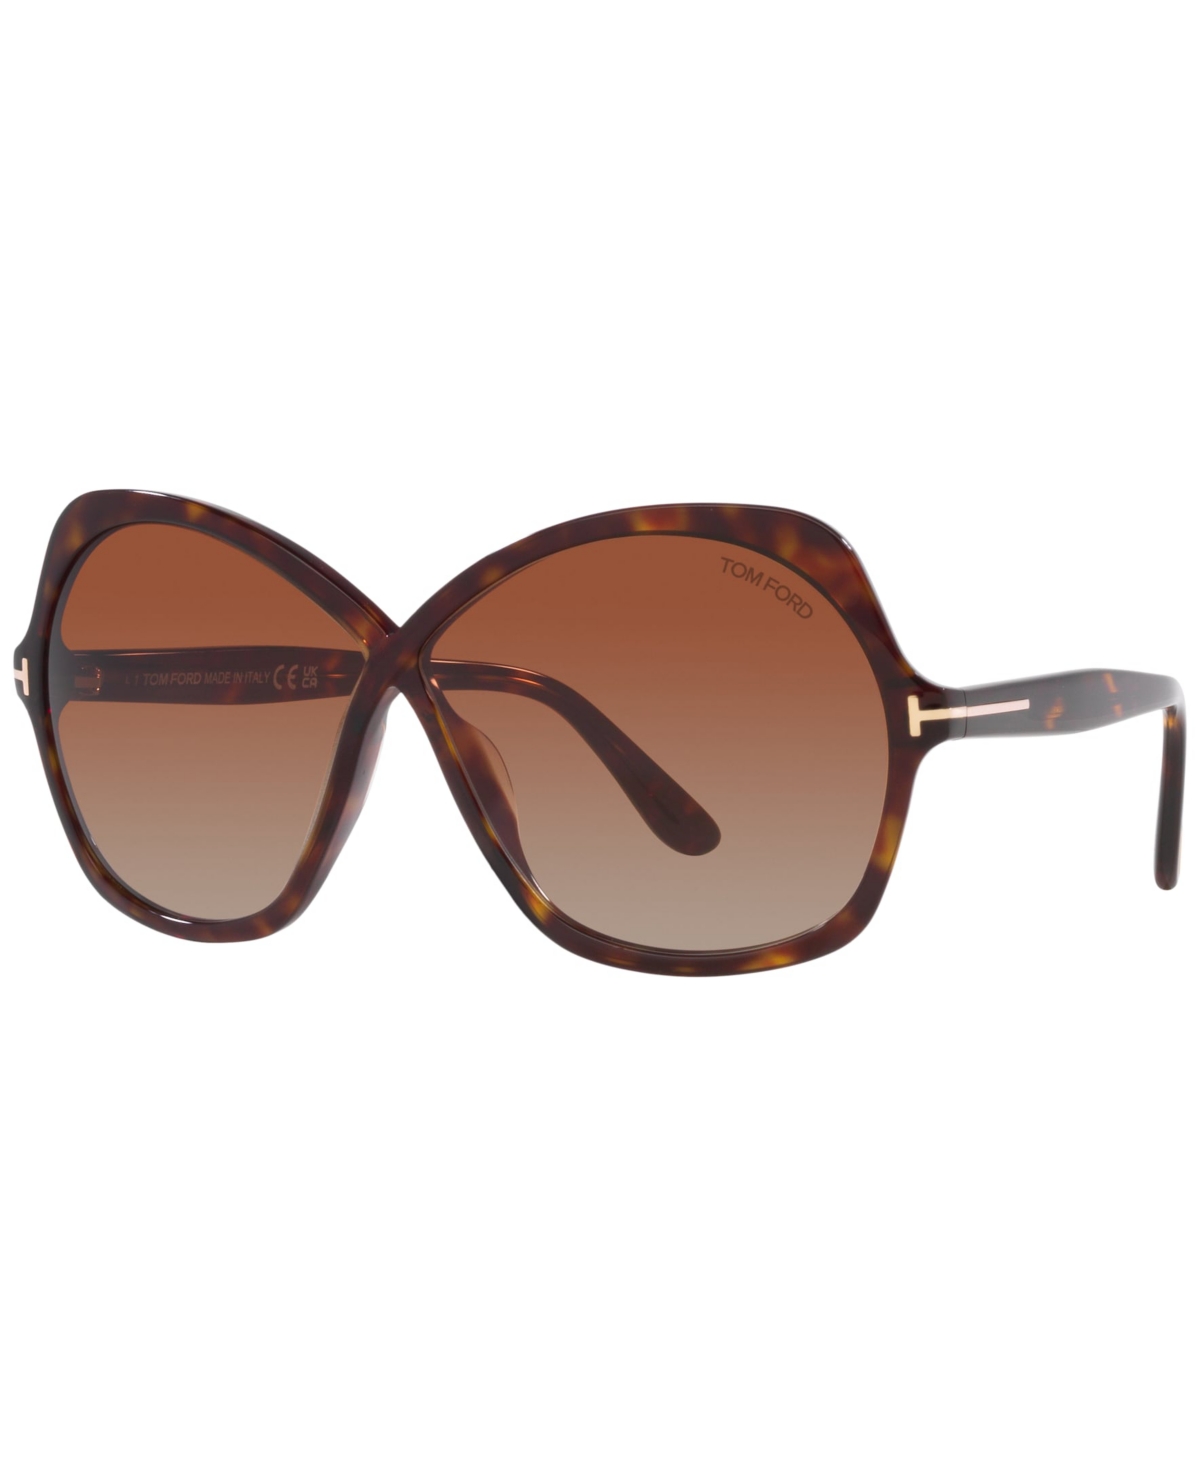 Tom Ford Women's Sunglasses, Ft1013 In Brown Dark